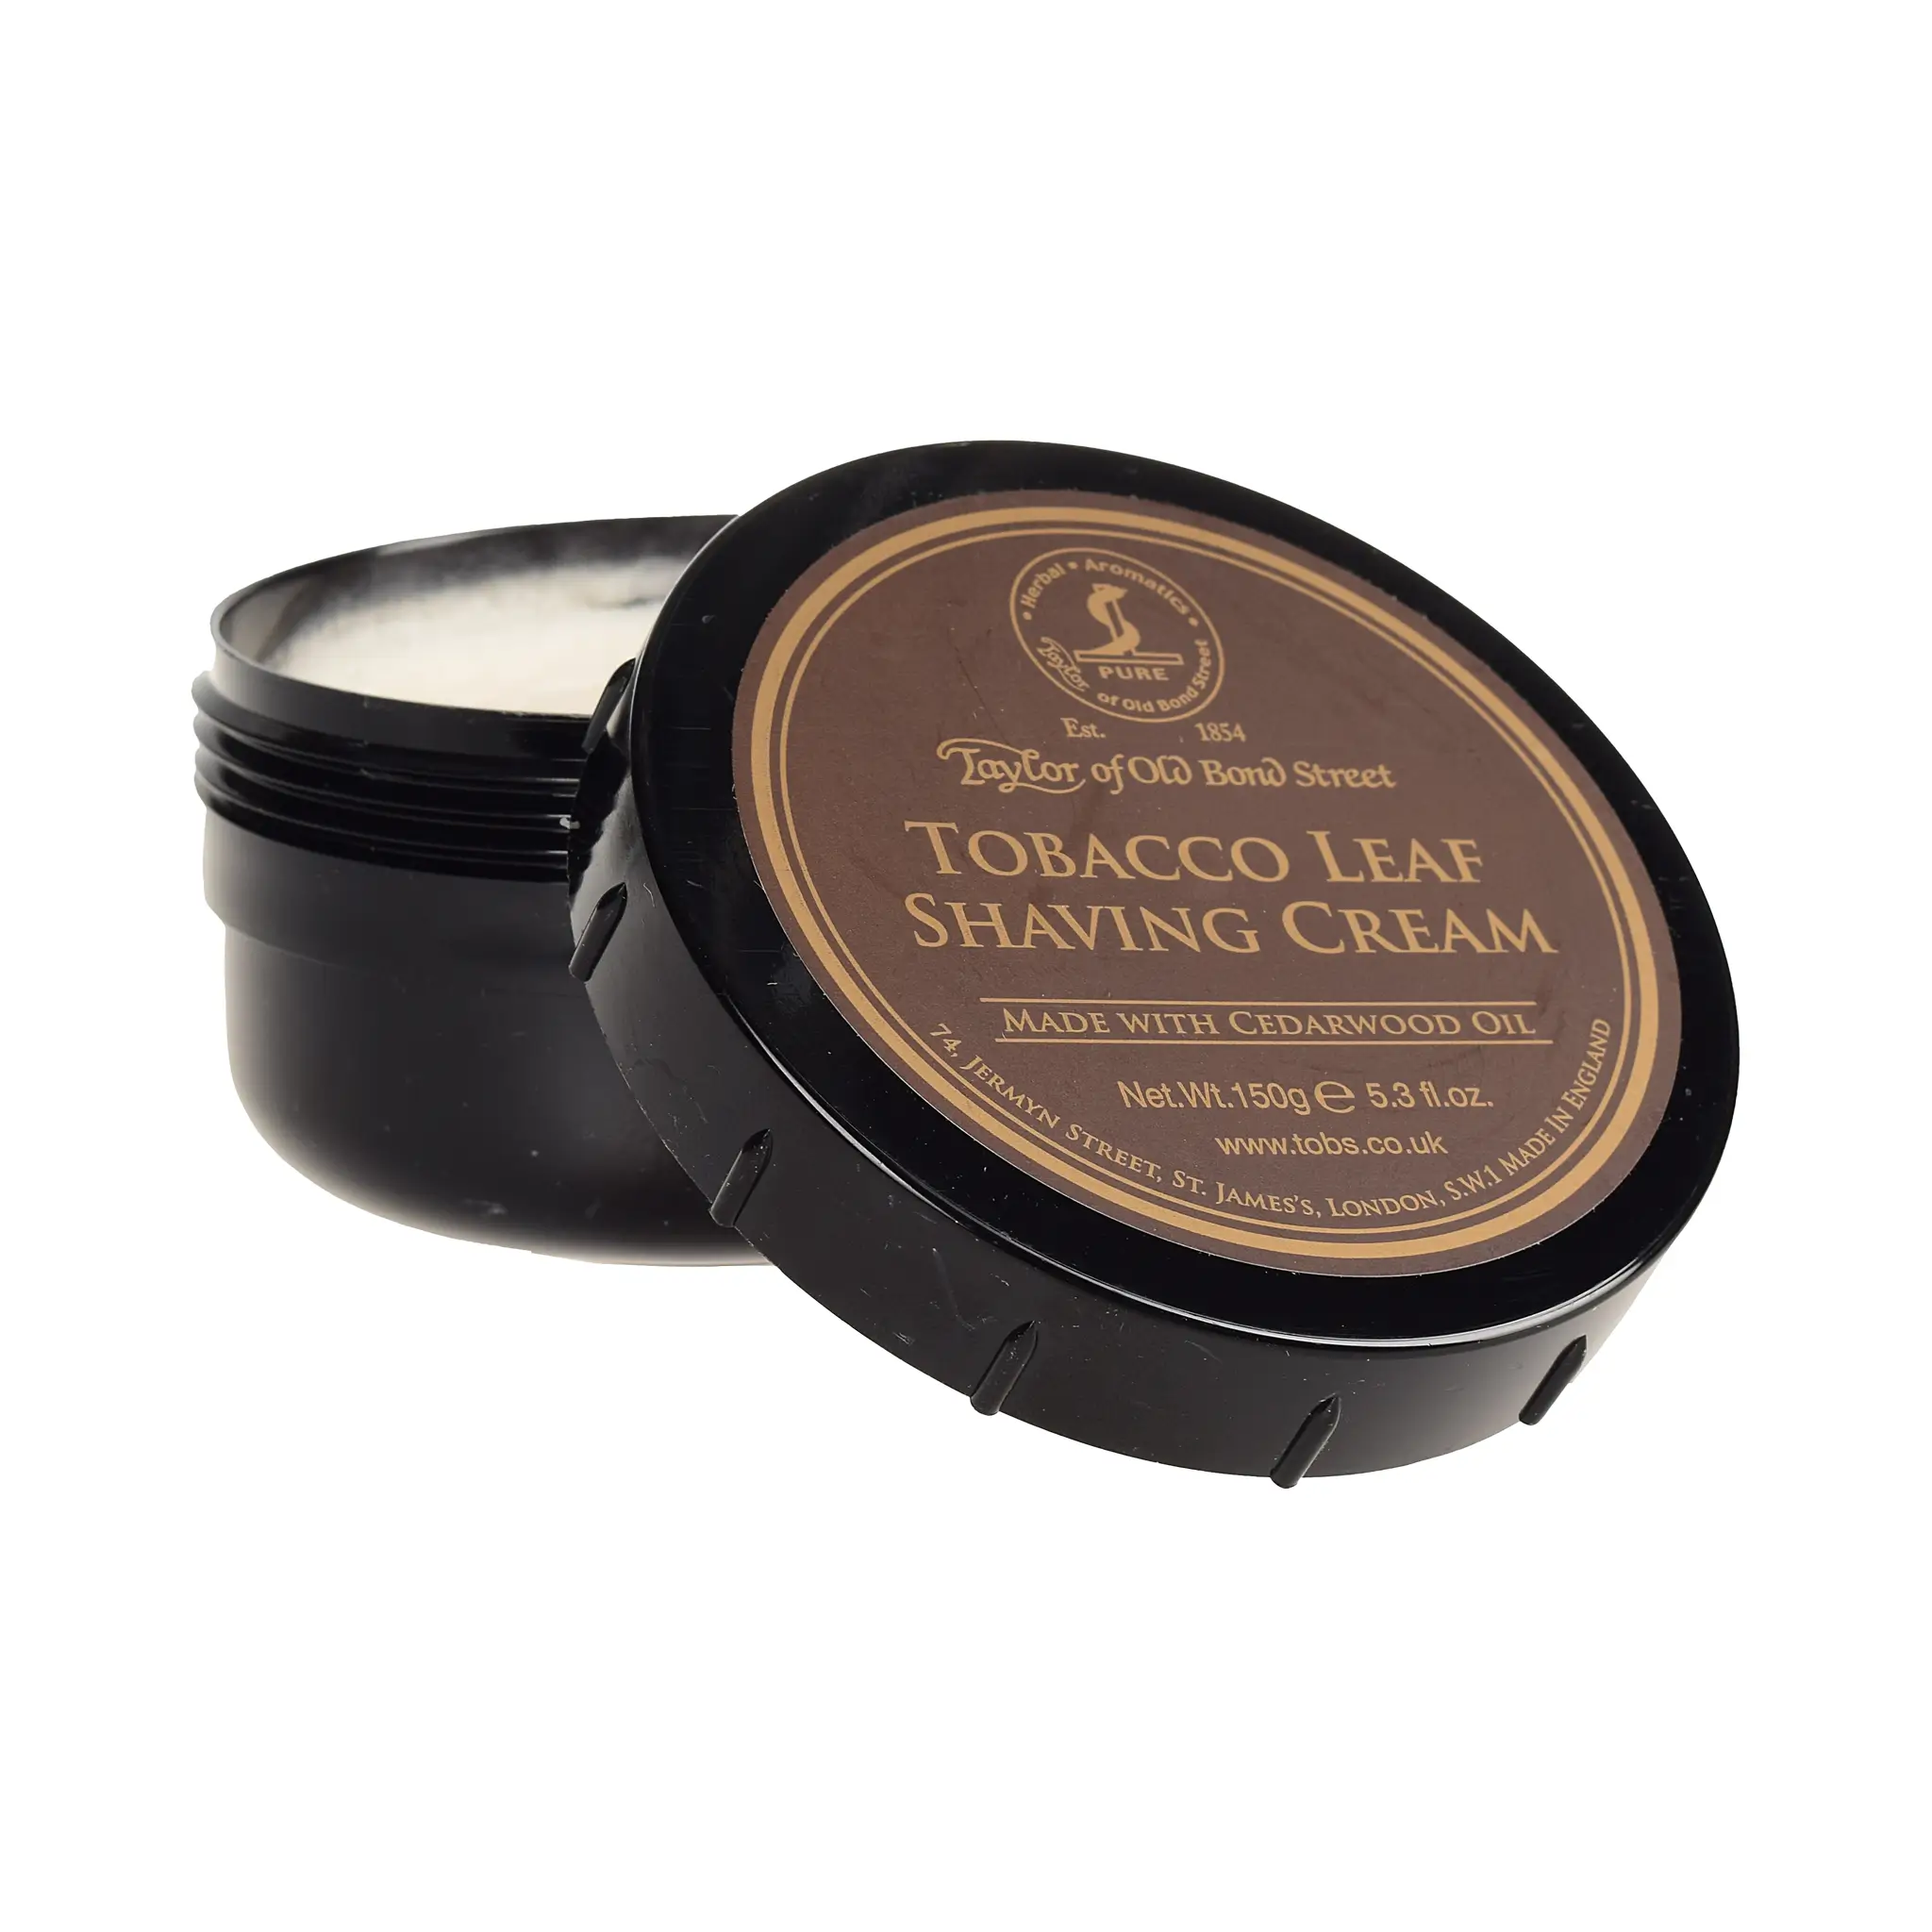 TAYLOR OF g Tabacco STREET Leaf 150 Tonsus Shaving – BOND Cream, OLD